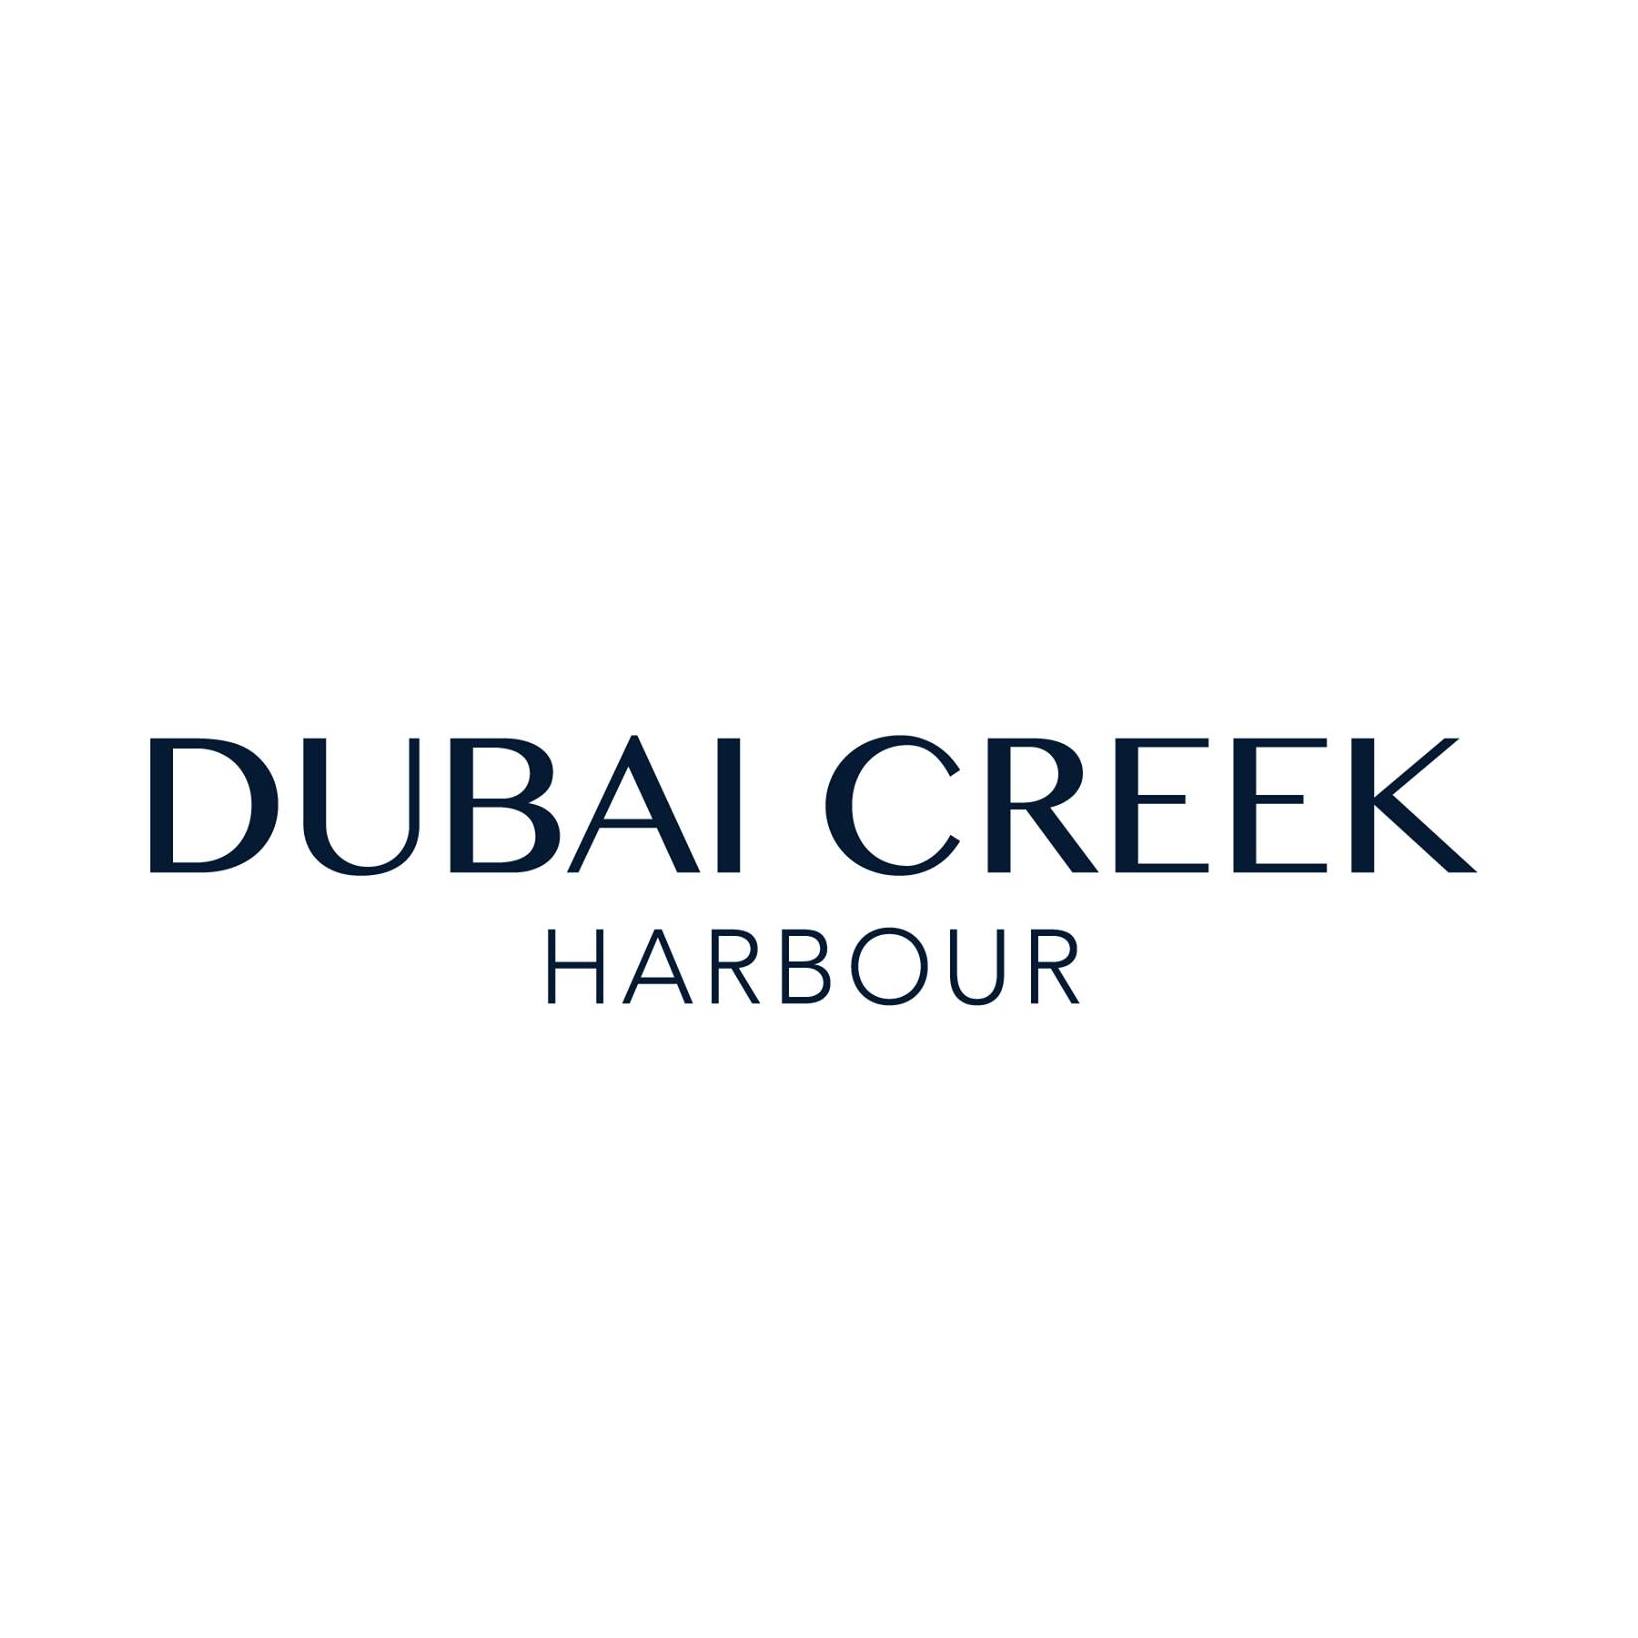 Dubai Creek Harbour - Coming Soon in UAE